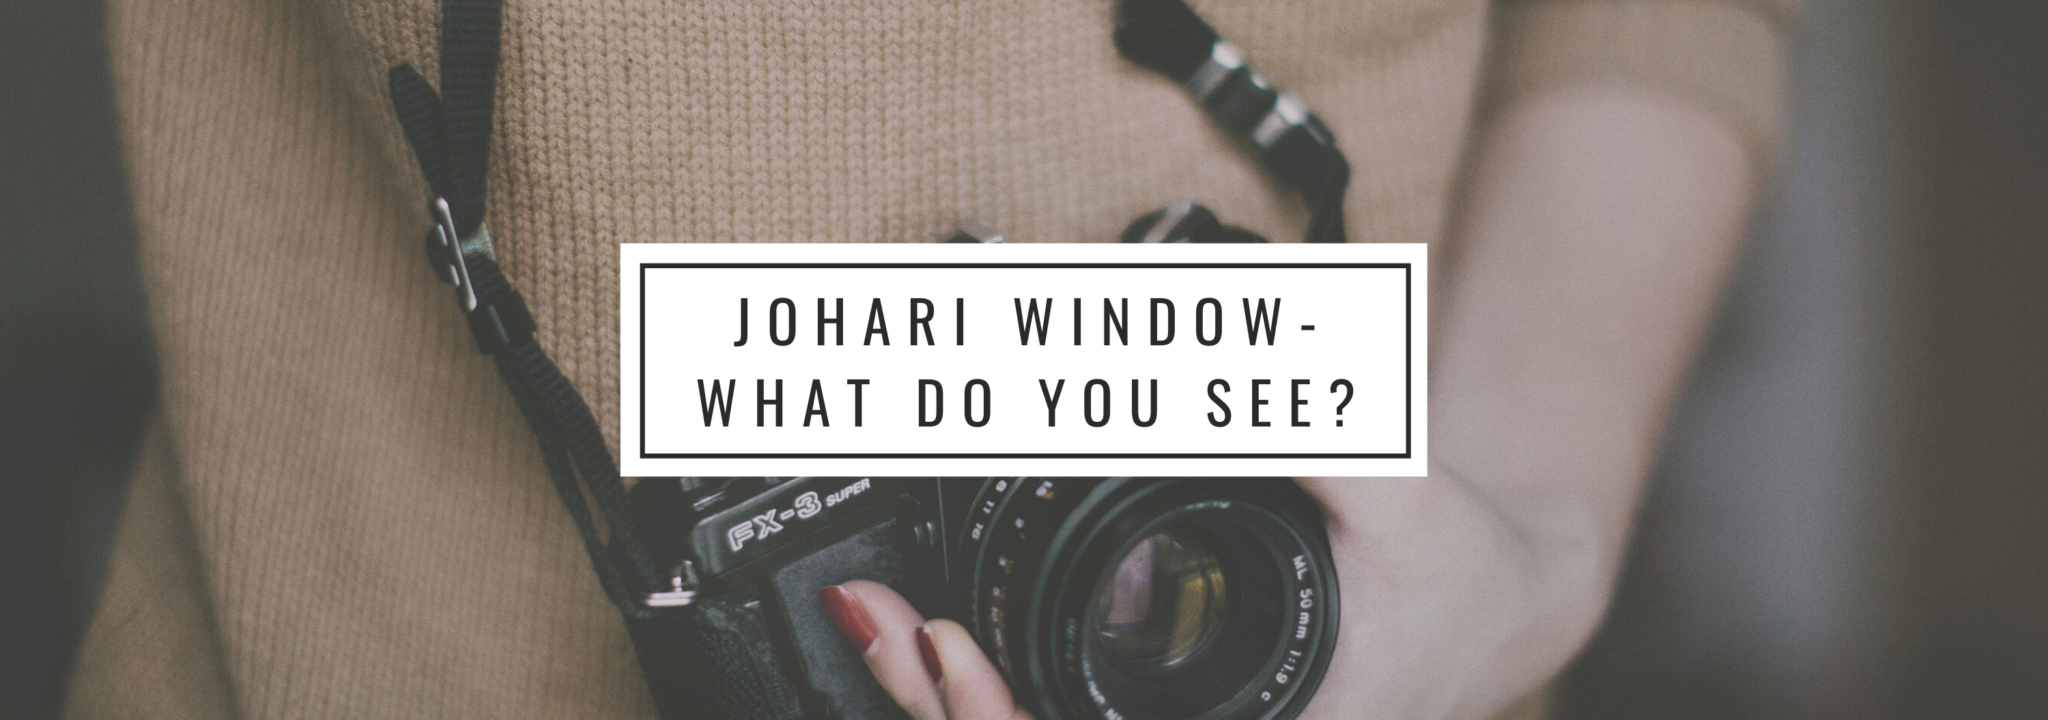 Johari window @ procurement templates